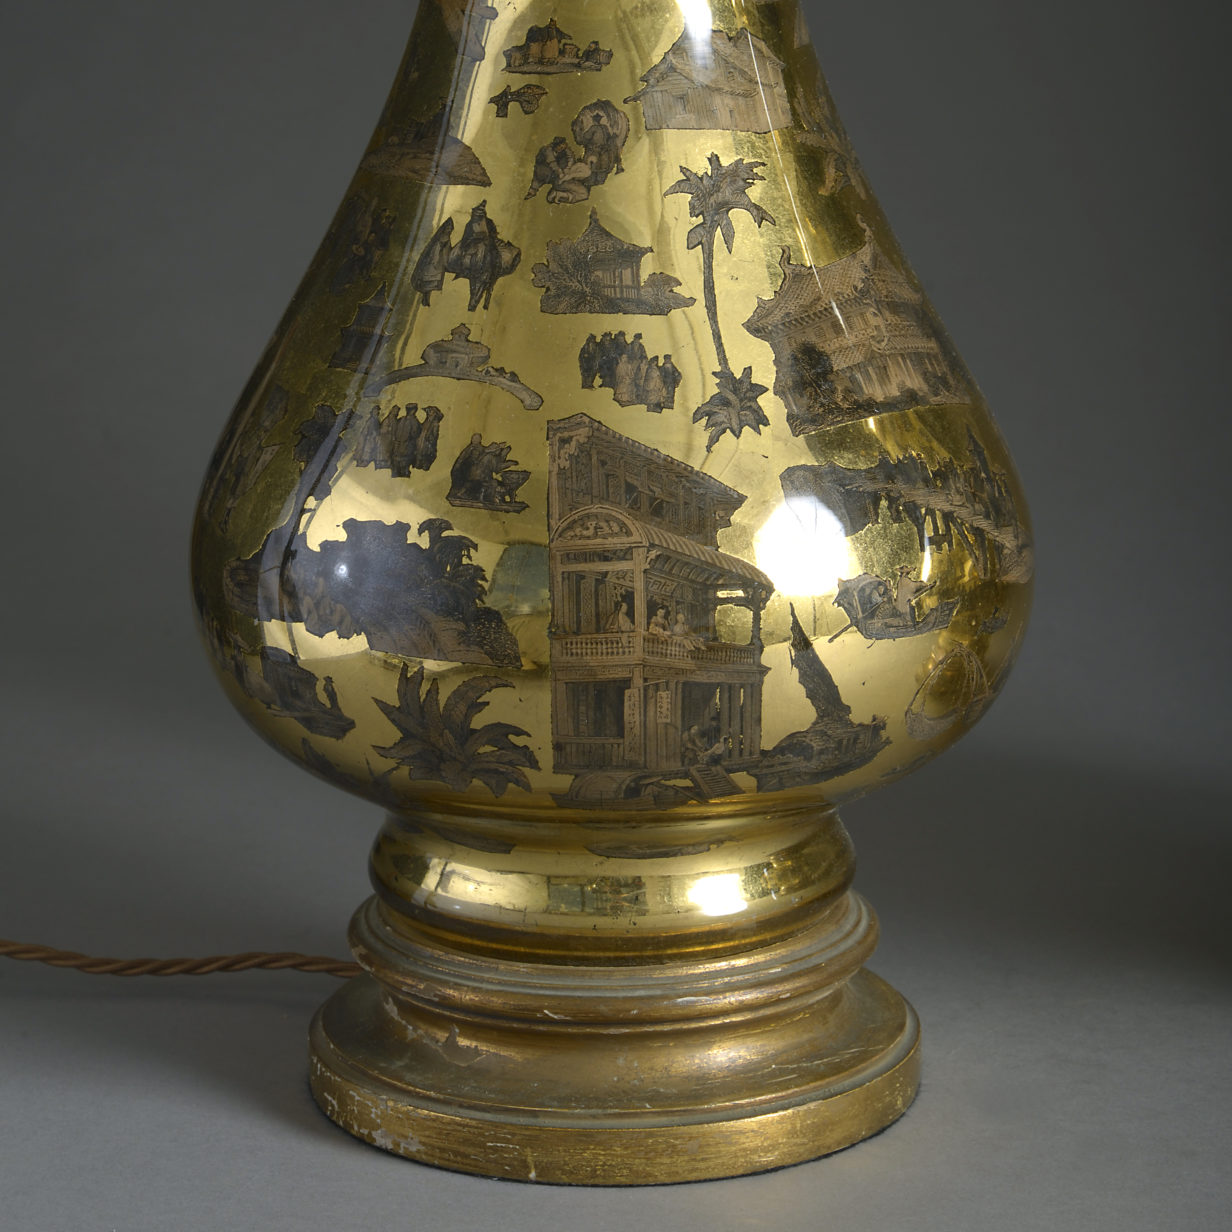 Mid-20th century decalcomania vase lamp